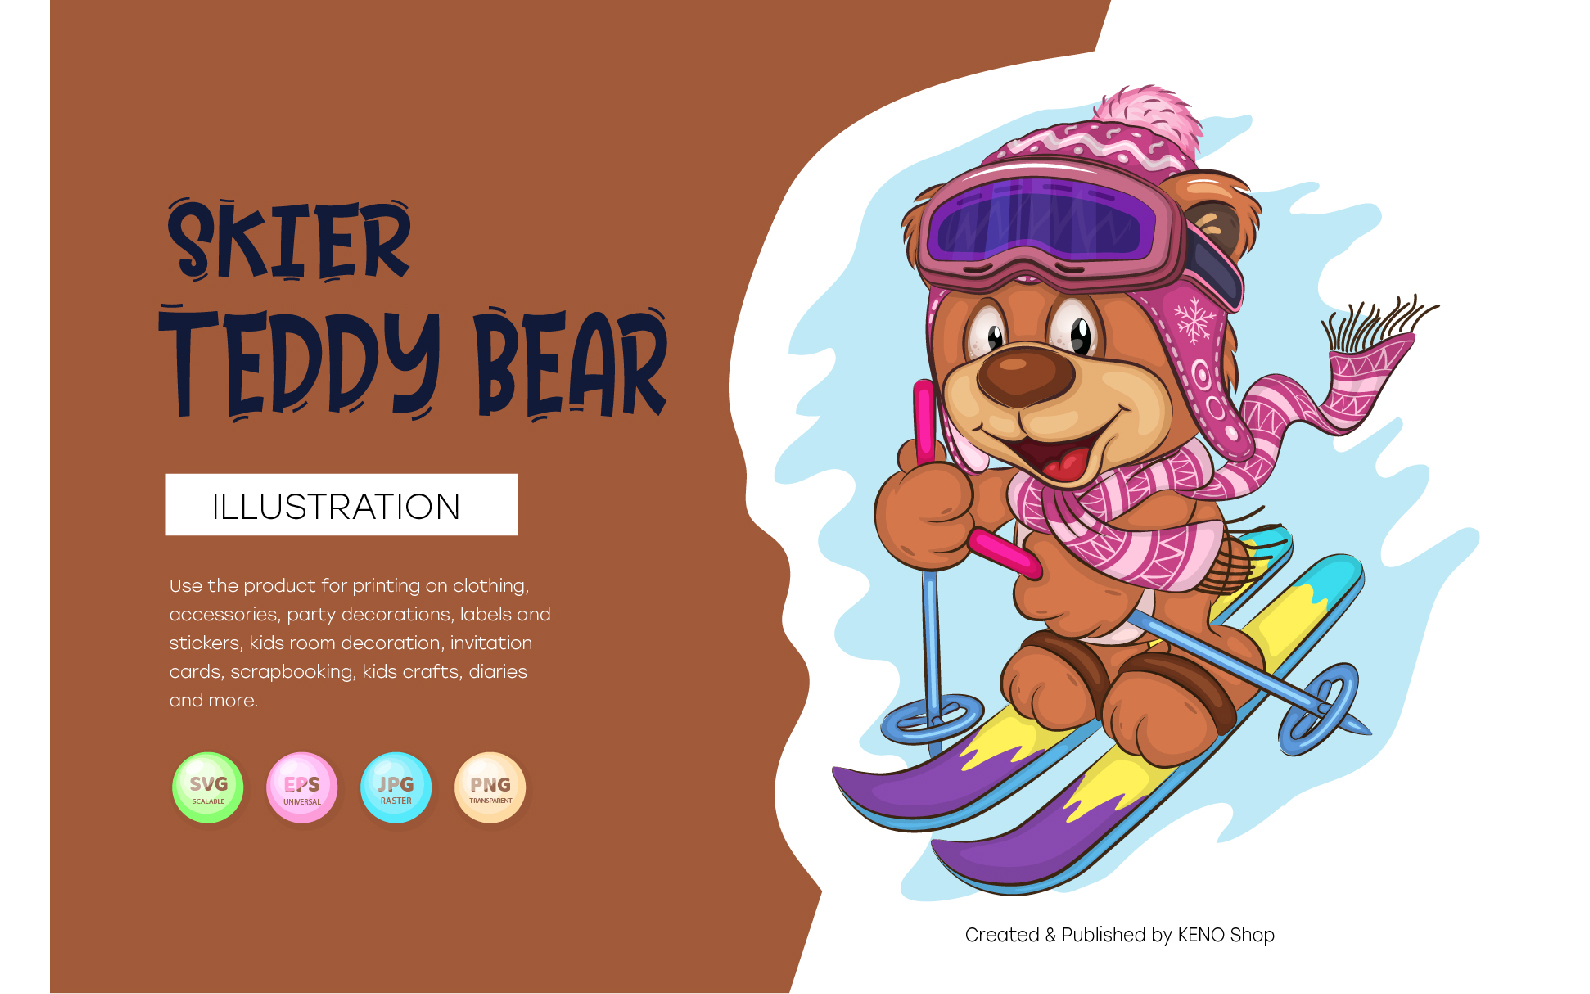 Cartoon Teddy Bear Skier. T-Shirt, PNG, SVG.